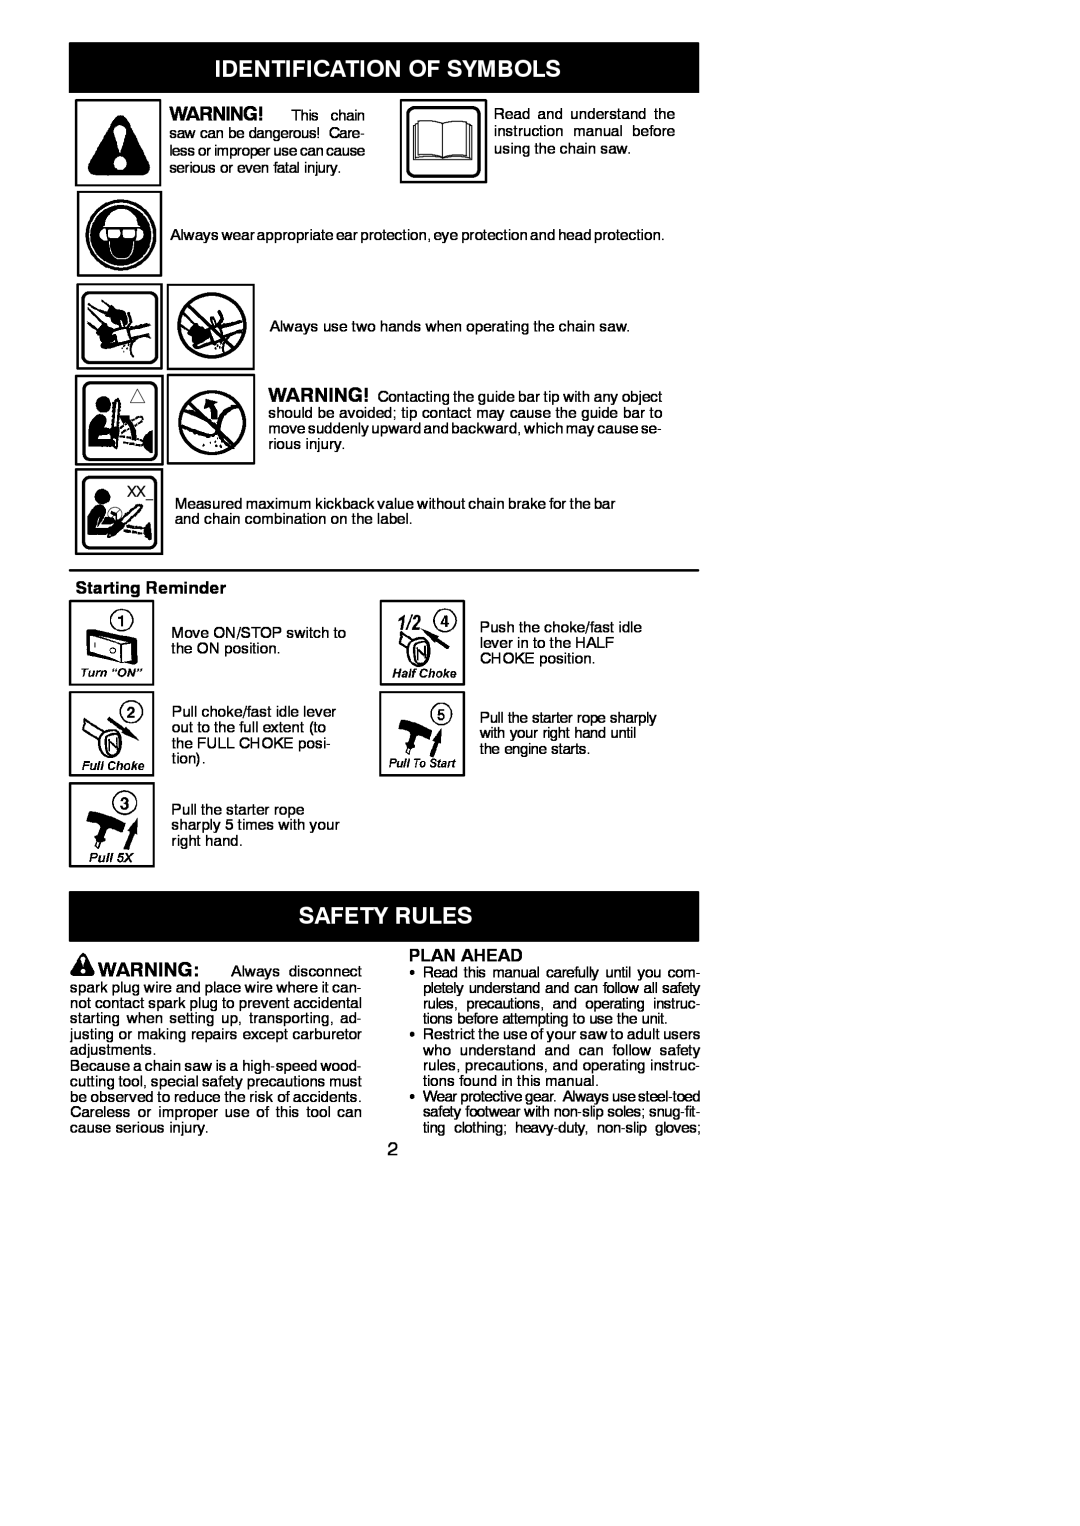 Poulan PP4620AV instruction manual Identification Of Symbols, Safety Rules, Starting Reminder, Plan Ahead 